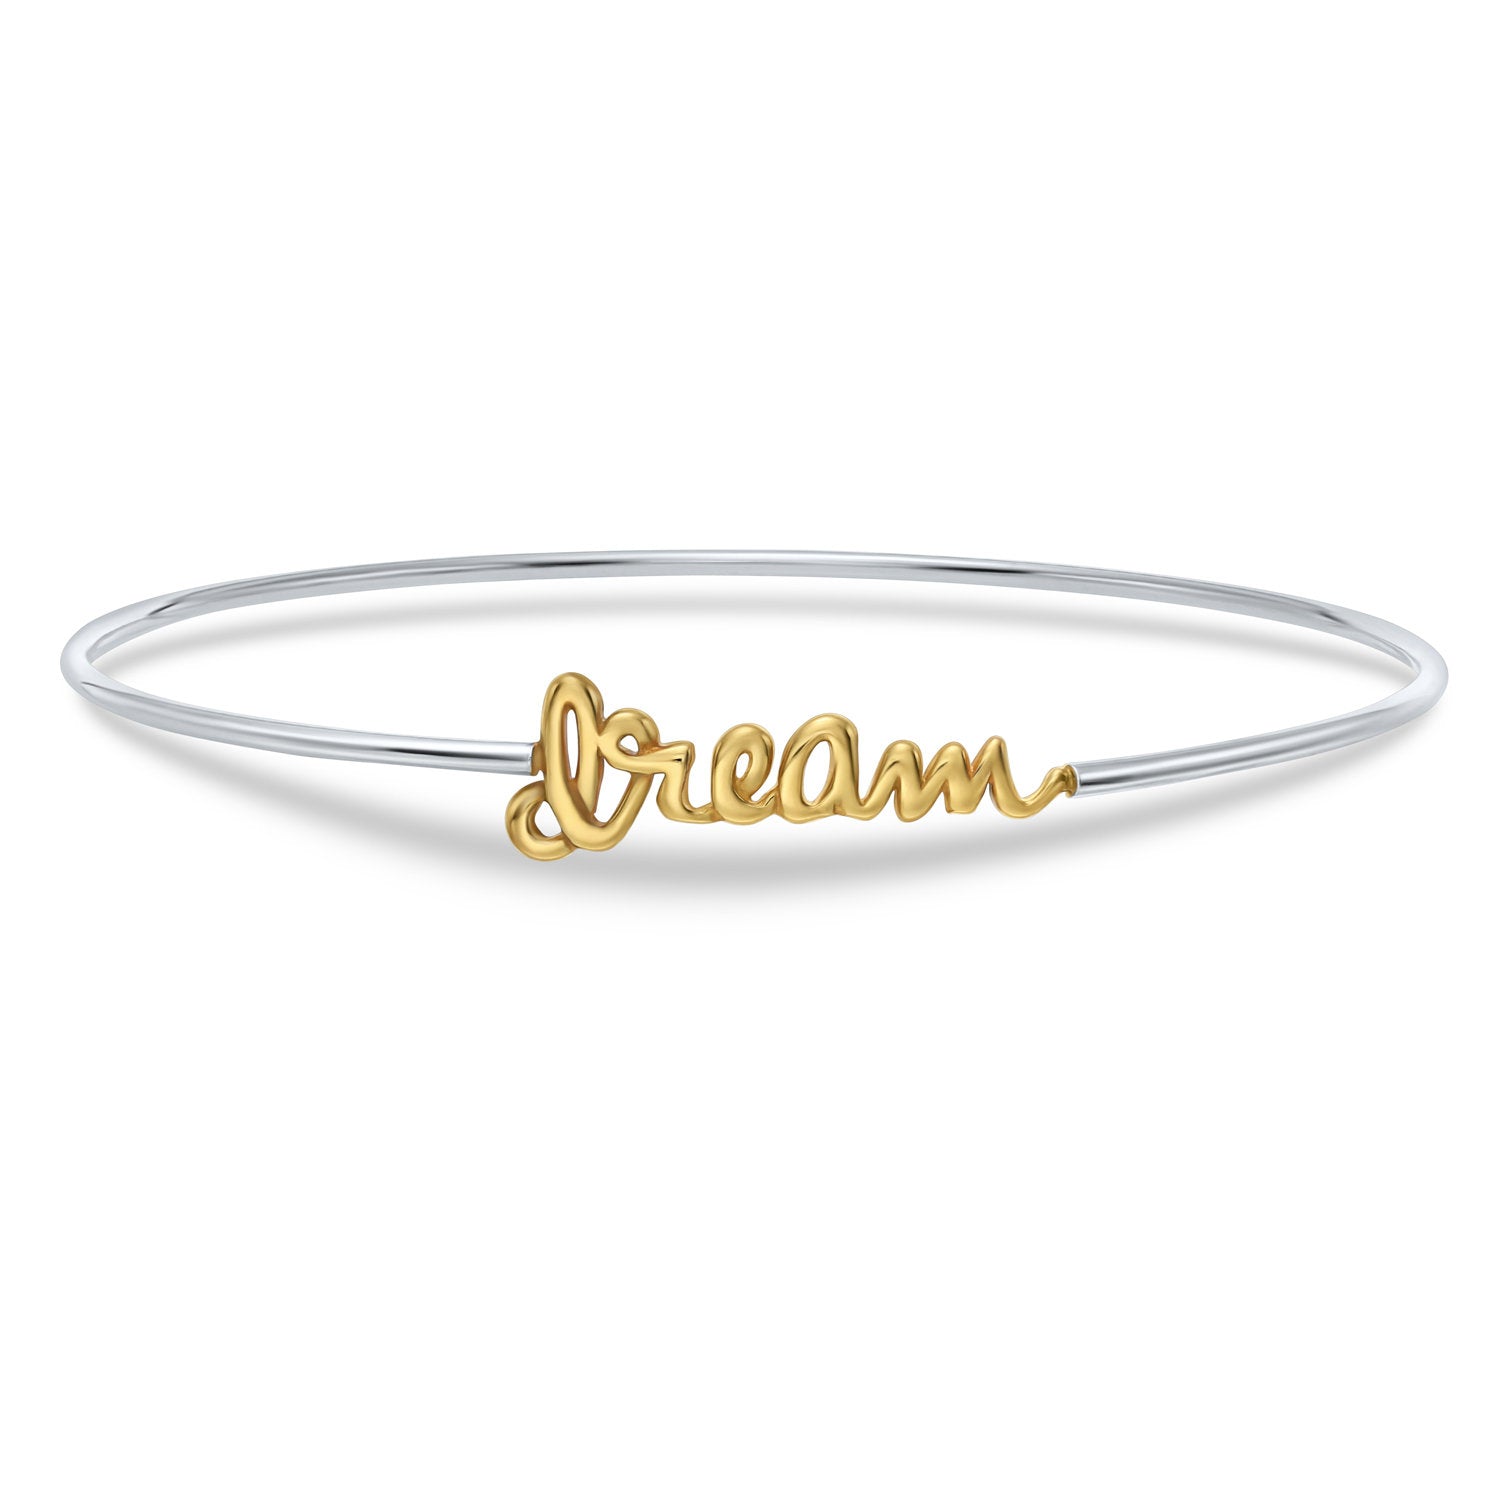 DREAM Bangle Bracelet, Gold Plated in Sterling Silver